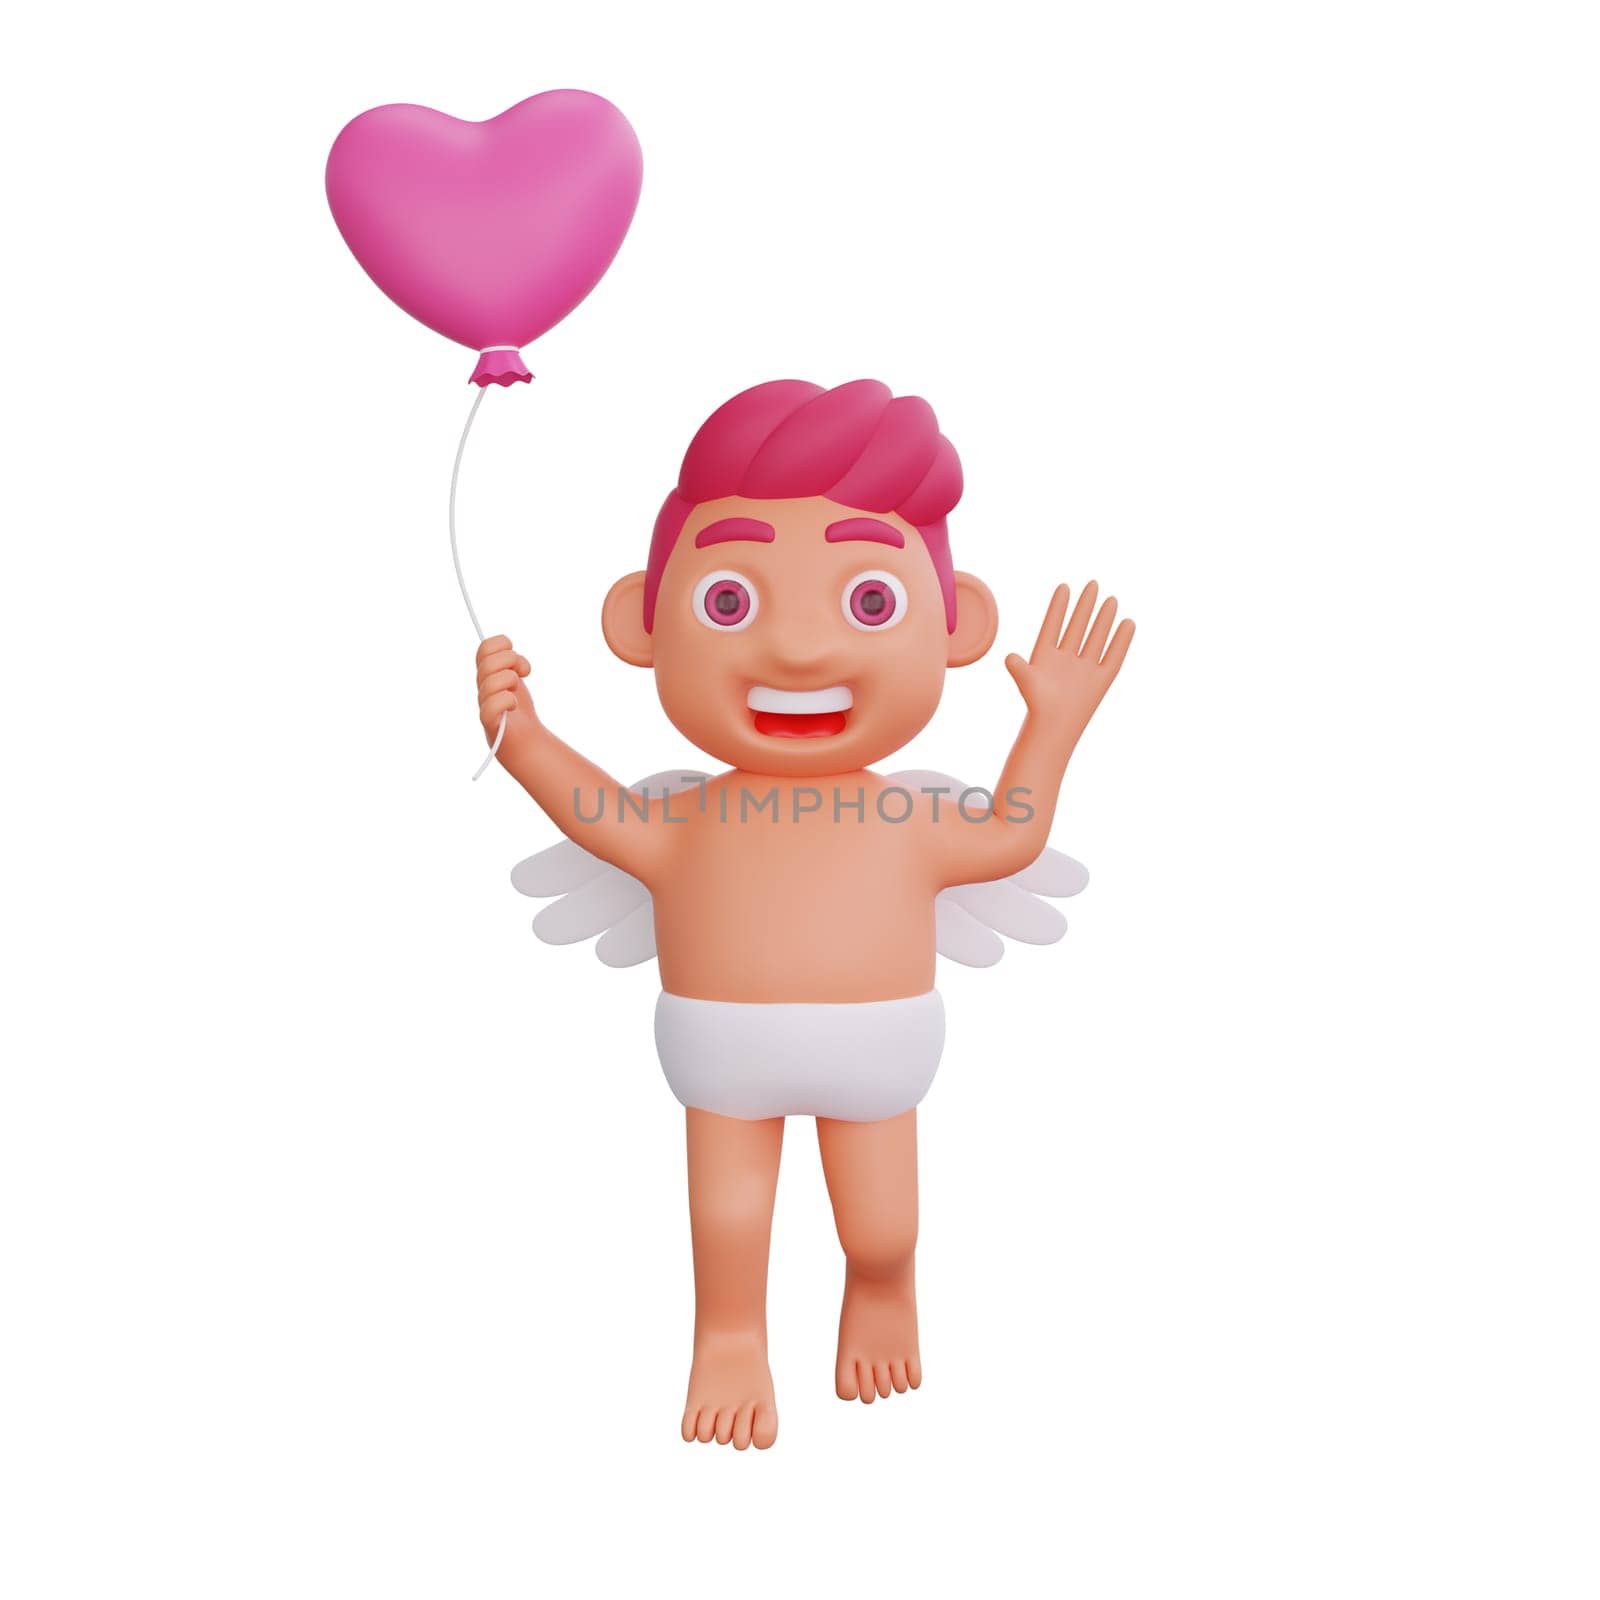 3D illustration of Valentine Cupid character Joyful with Heart Balloon by Rahmat_Djayusman